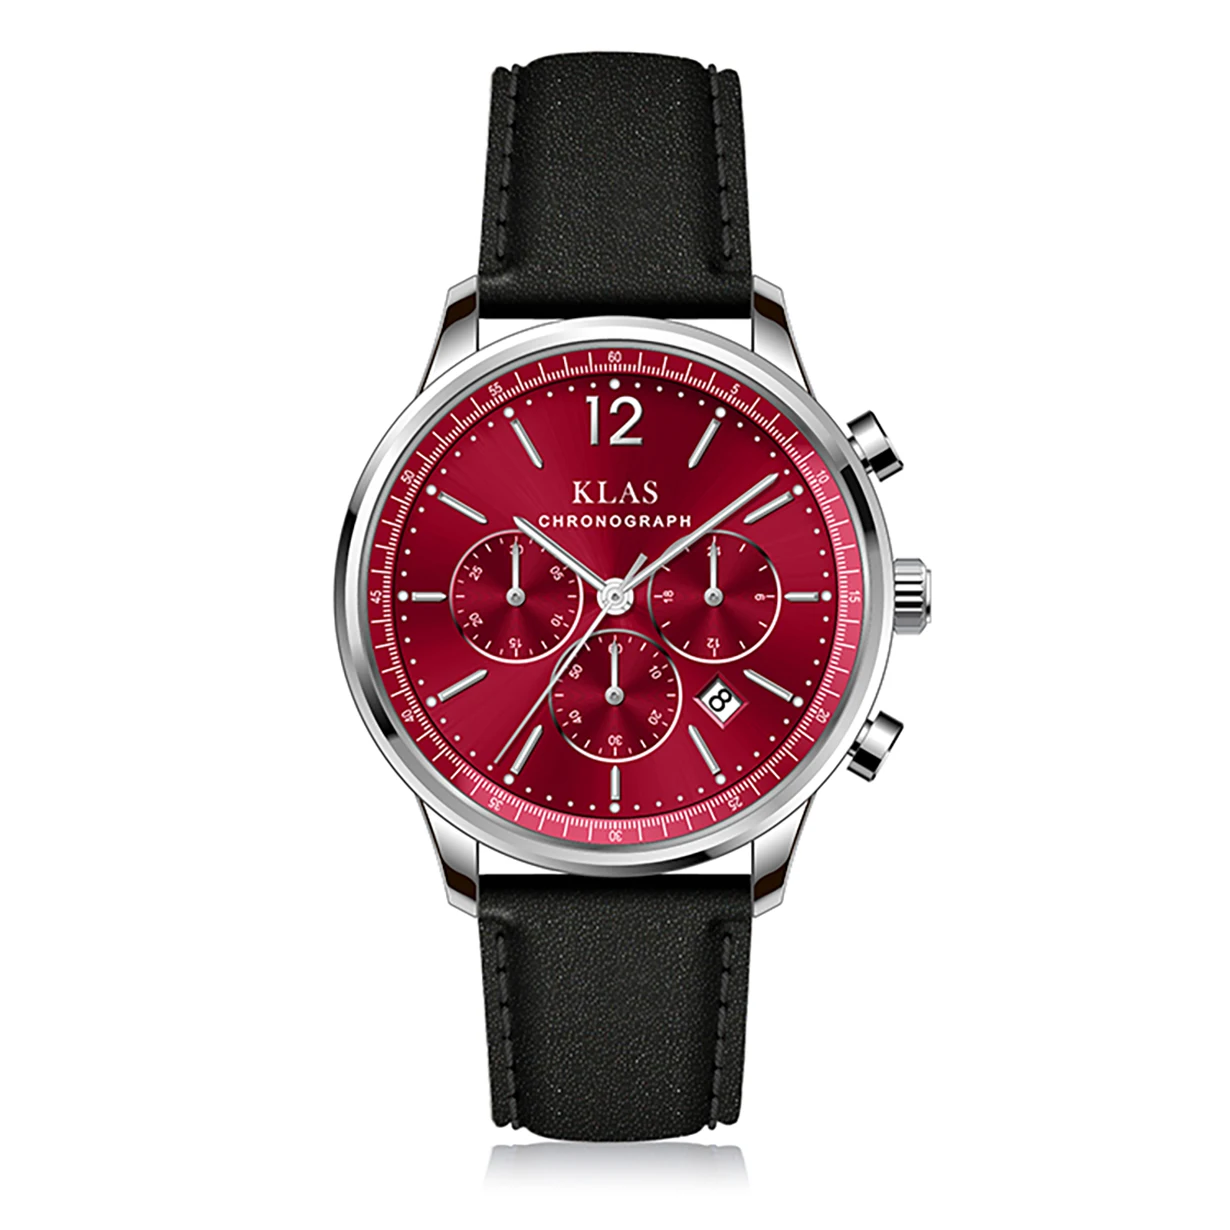 Men's watch top brand luxury quartz watch men's stainless steel waterproof and shockproof sports watch  KLAS